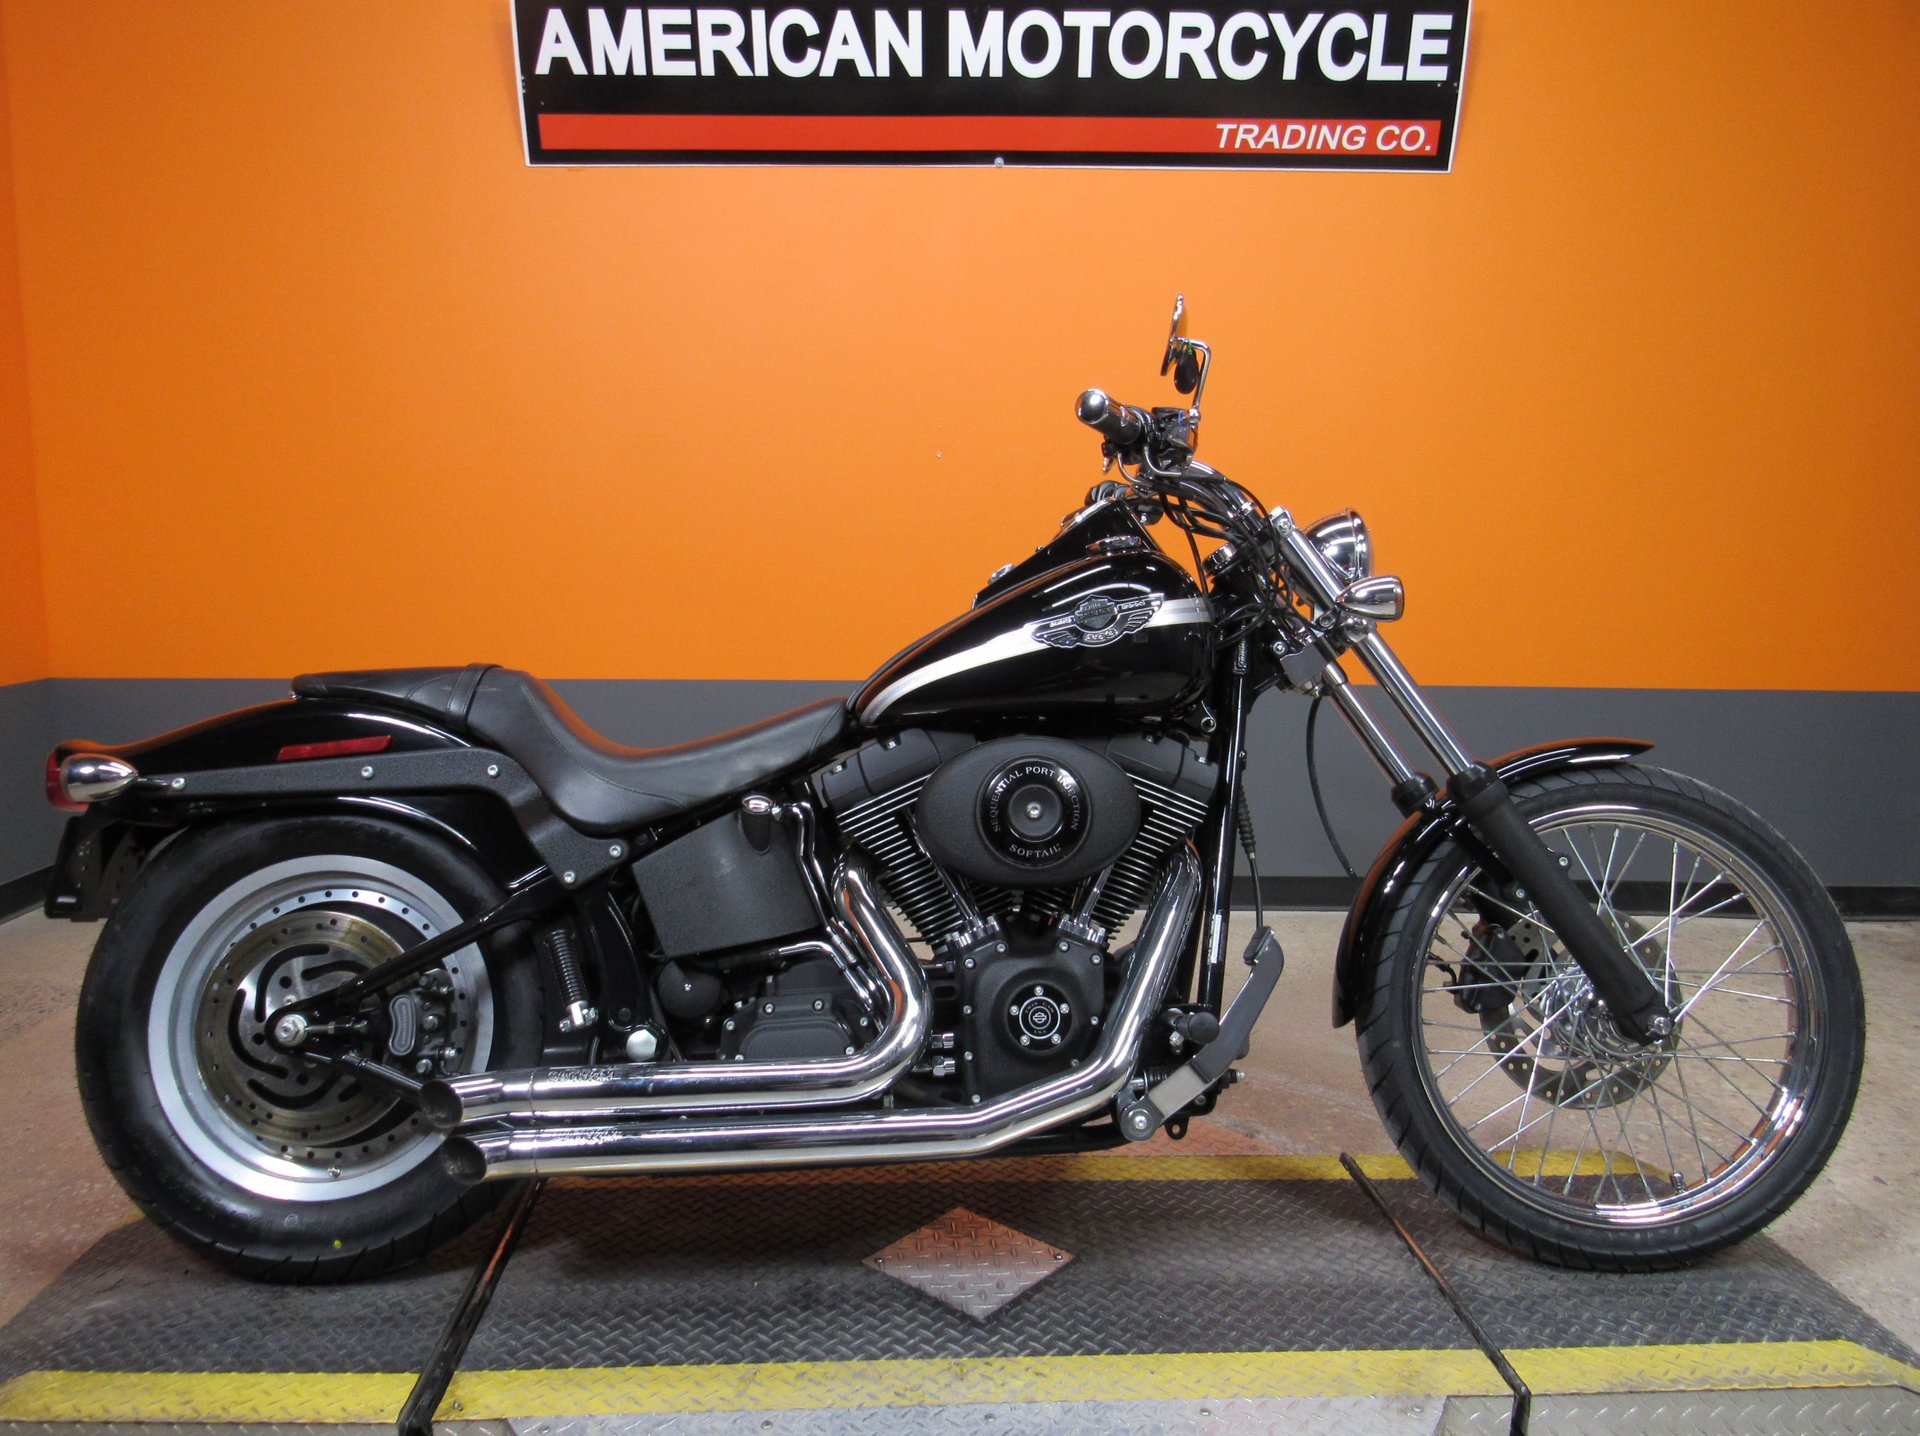 2003 Harley-Davidson Softail Night Train | American Motorcycle Trading  Company - Used Harley Davidson Motorcycles